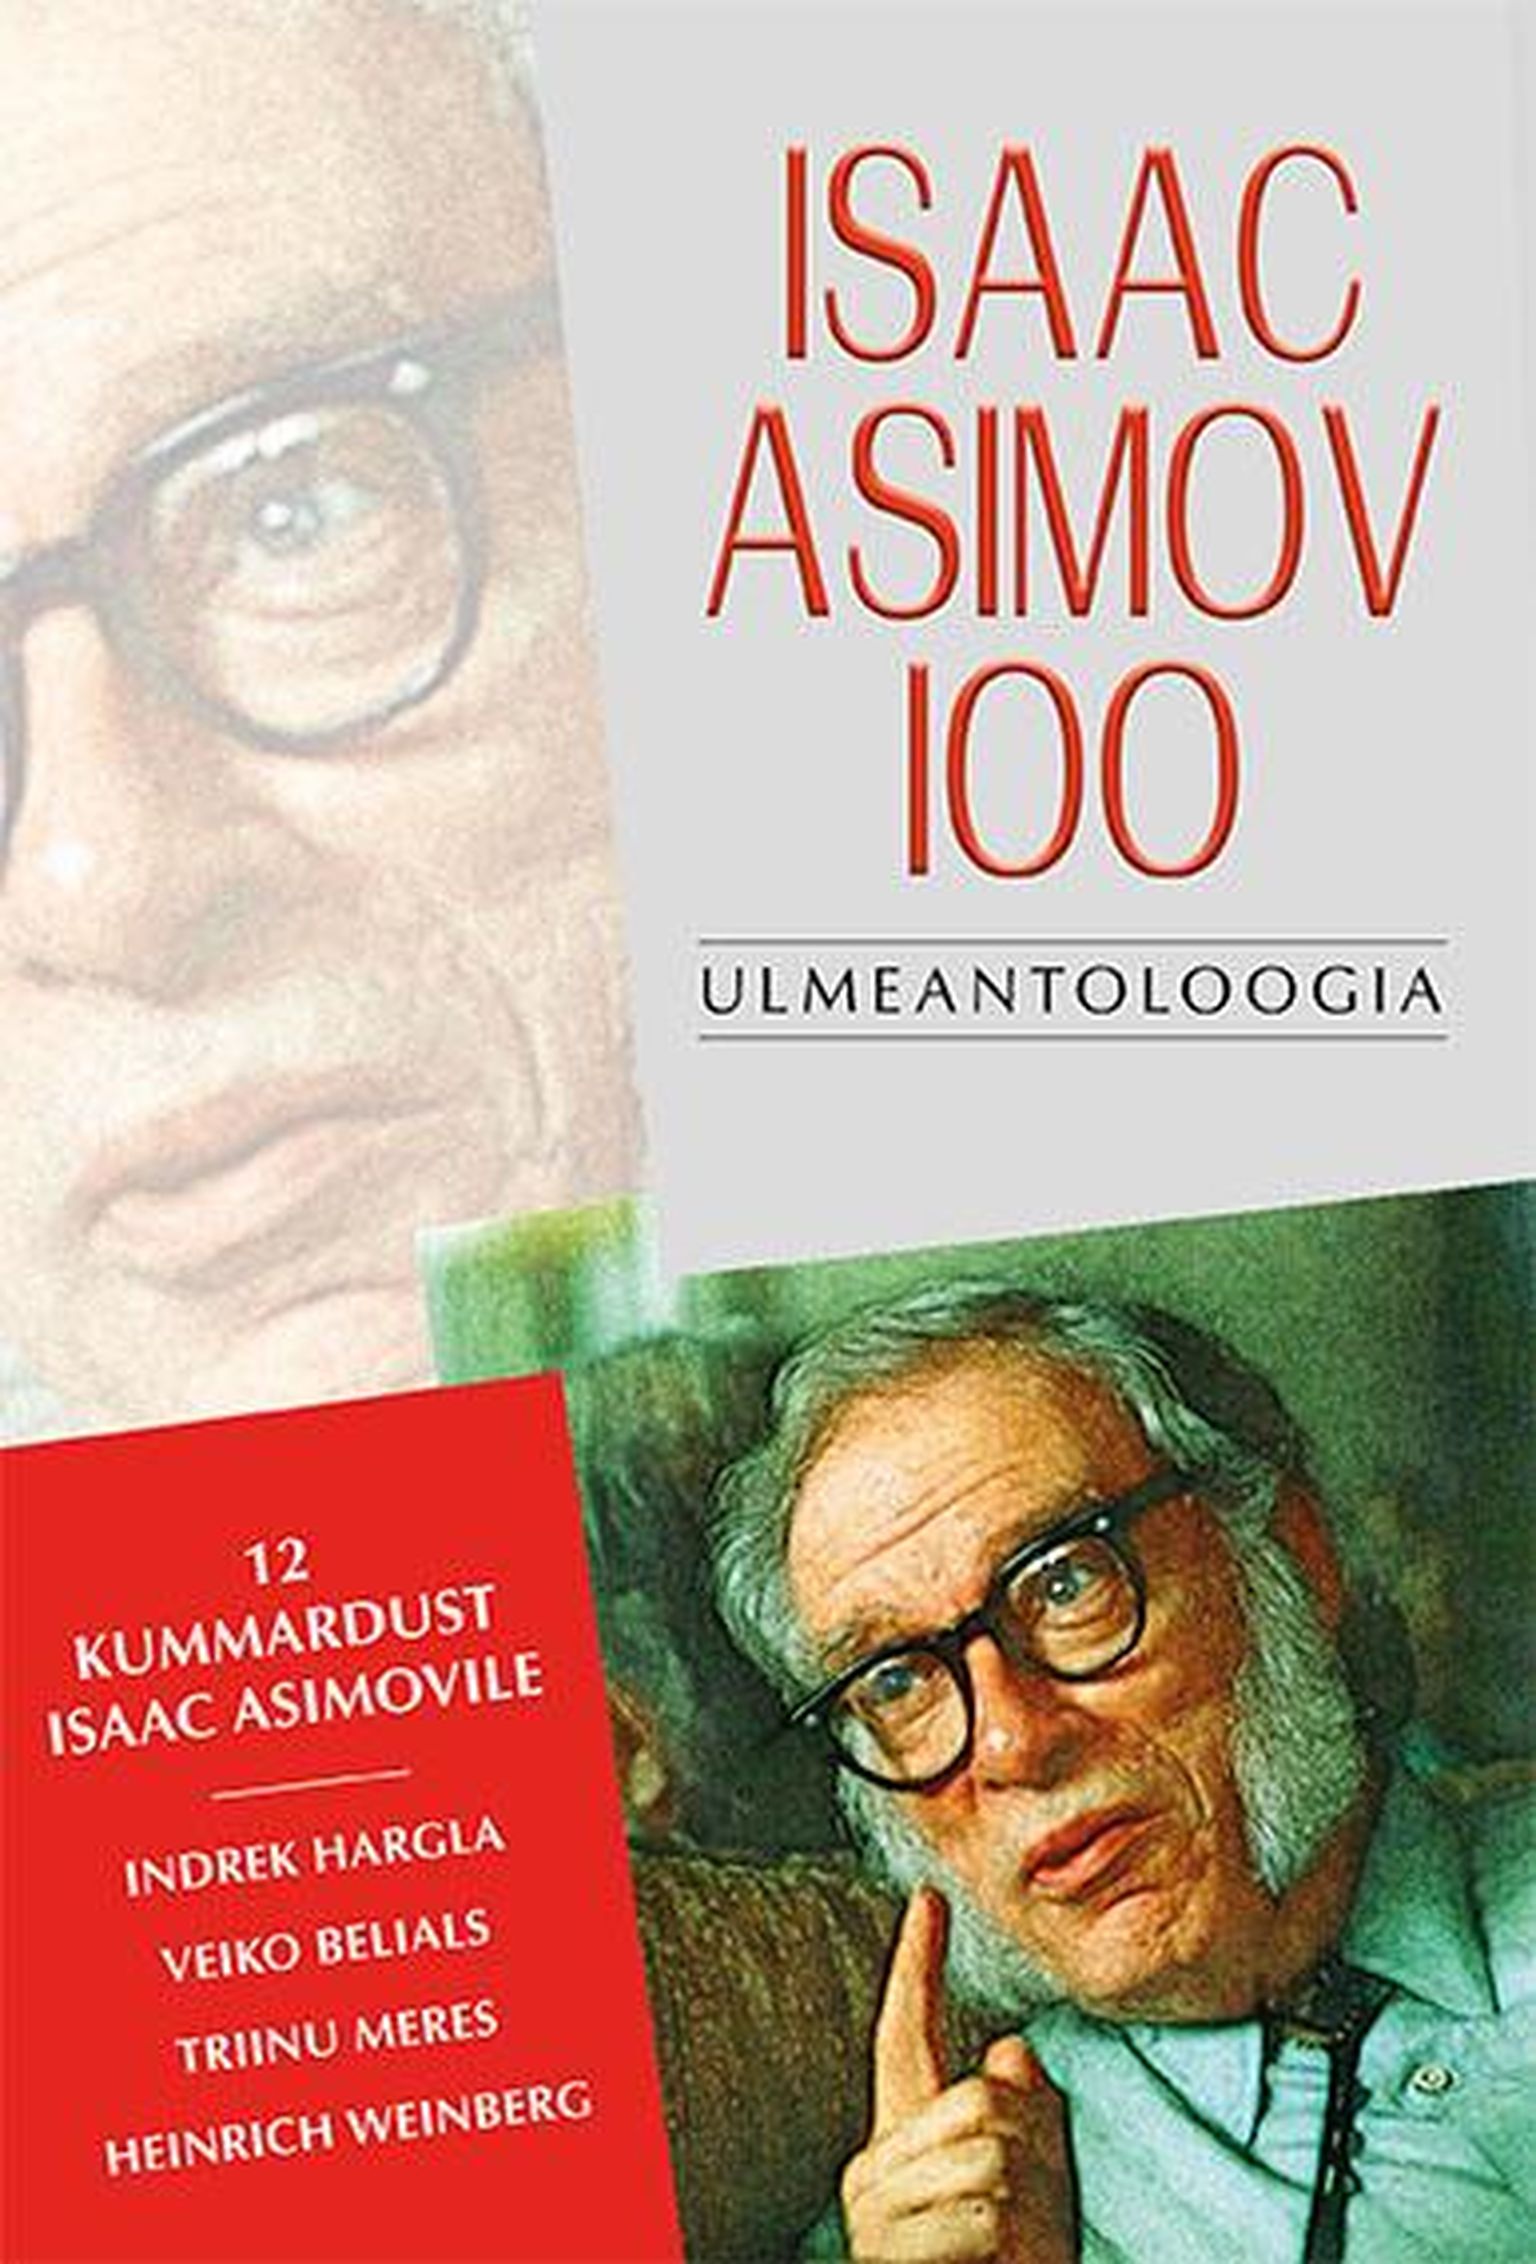 "Isaac Asimov 100. Ulmeantoloogia. 12 kummardust Isaac Asimovile"